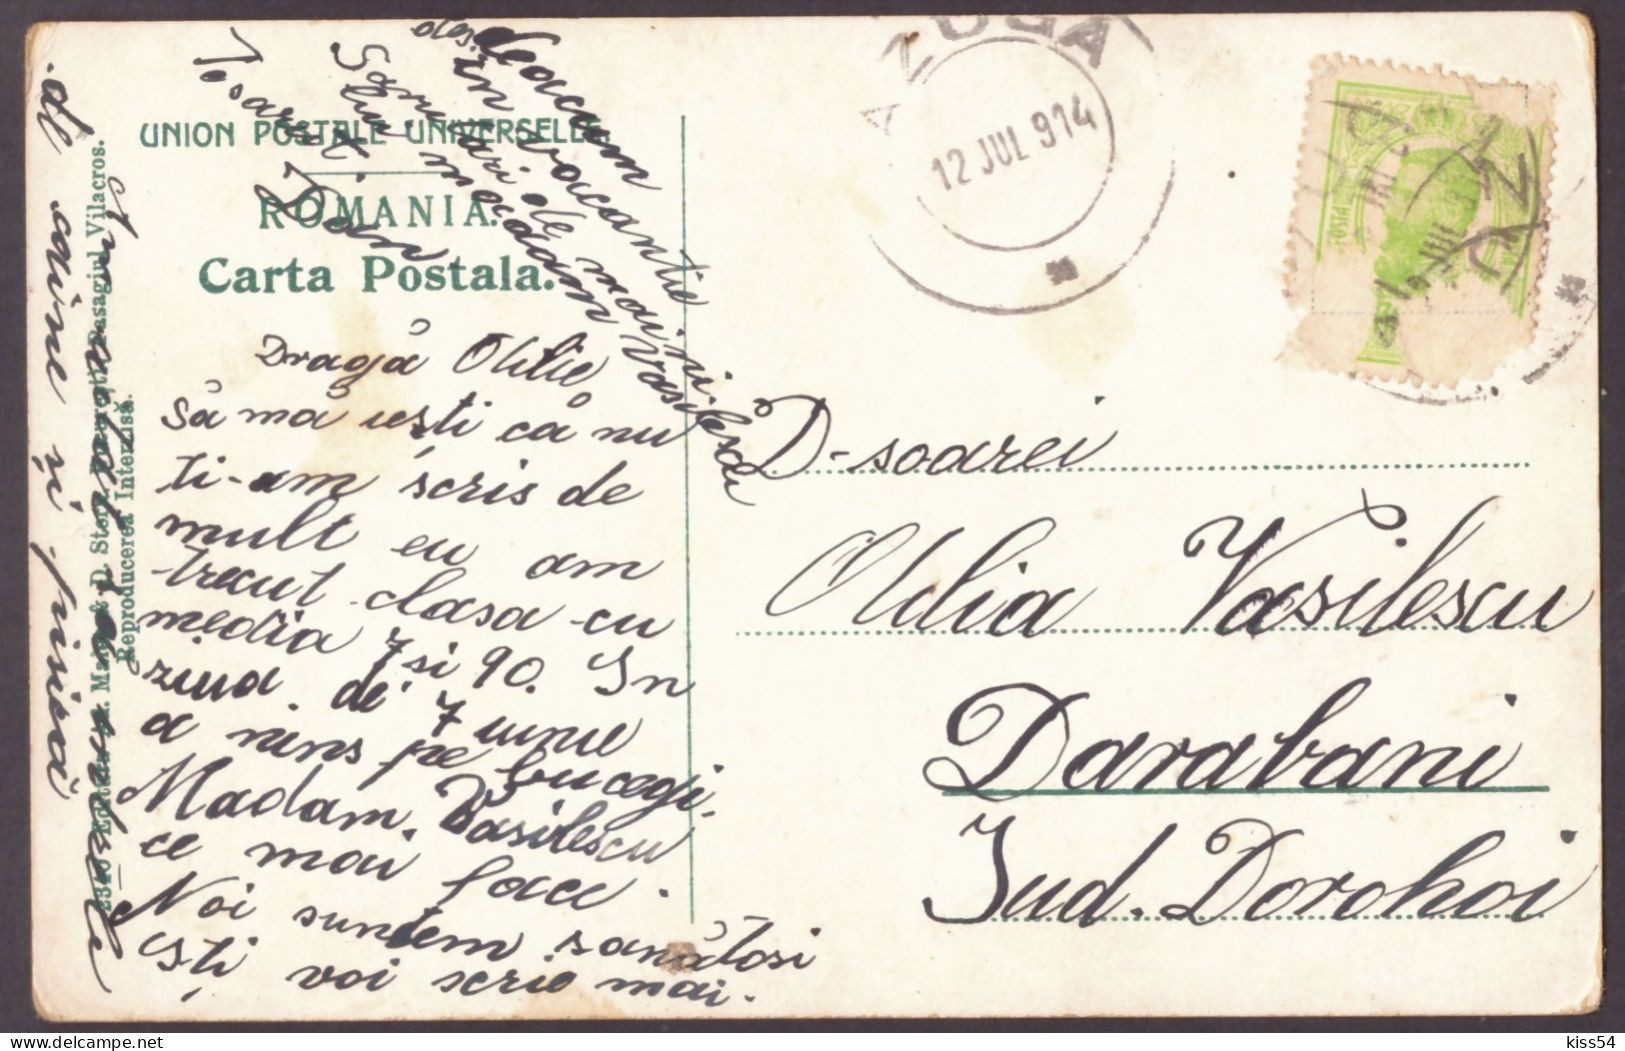 RO 47 - 23918 AZUGA, Prahova, RAMA, Romania - Old Postcard - Used - 1914 - Rumänien